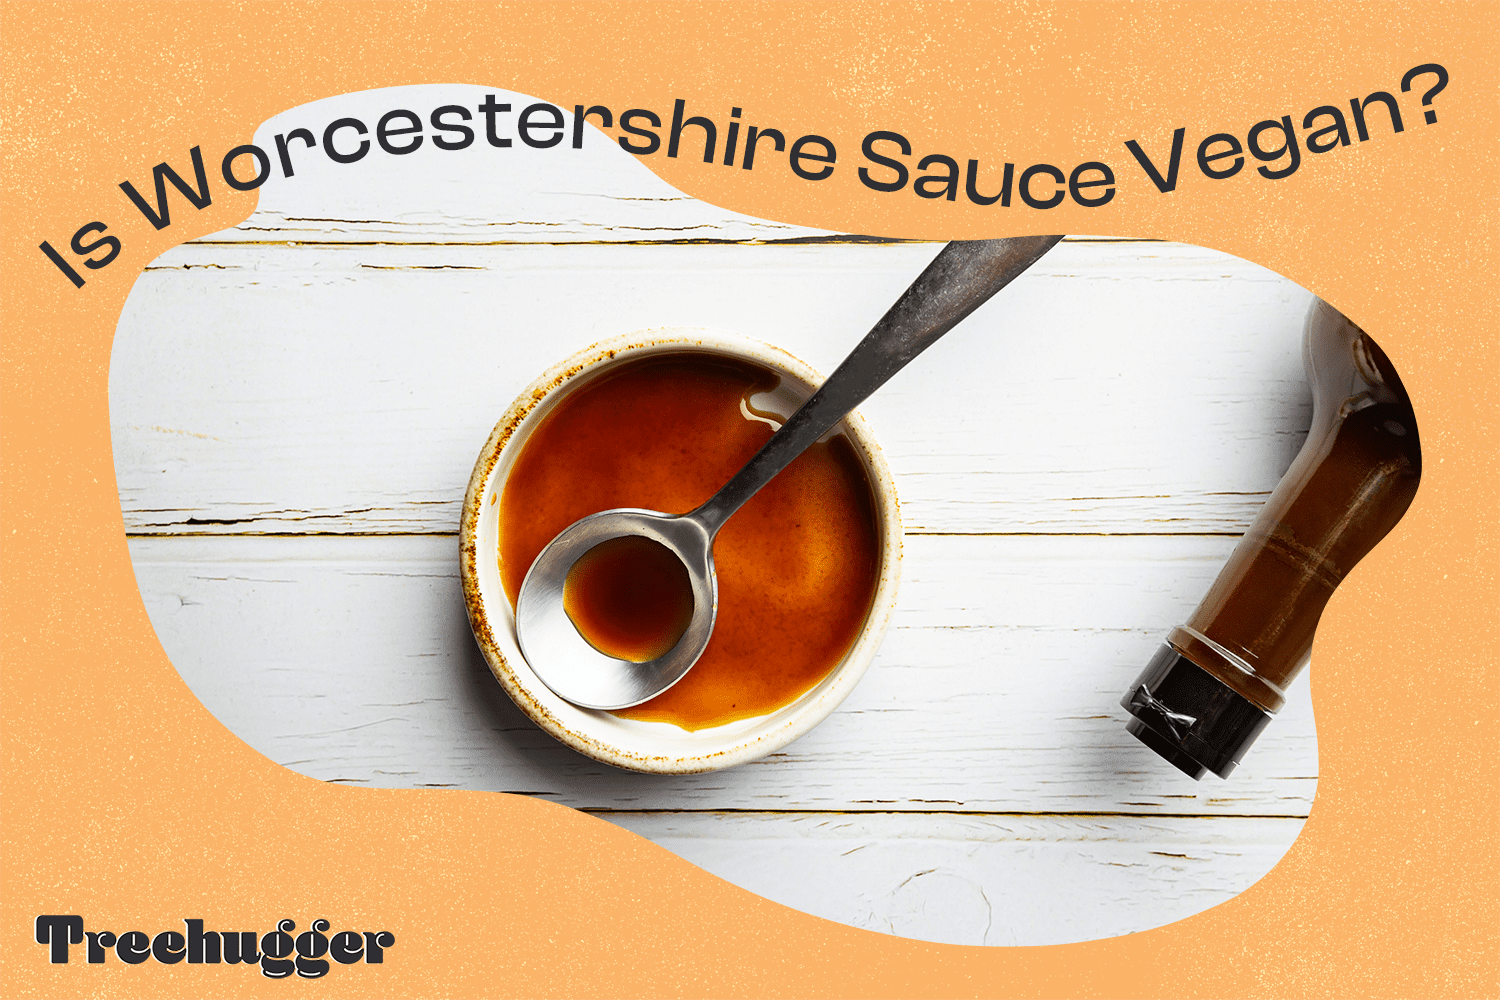 Is Worcestershire Sauce Vegan?